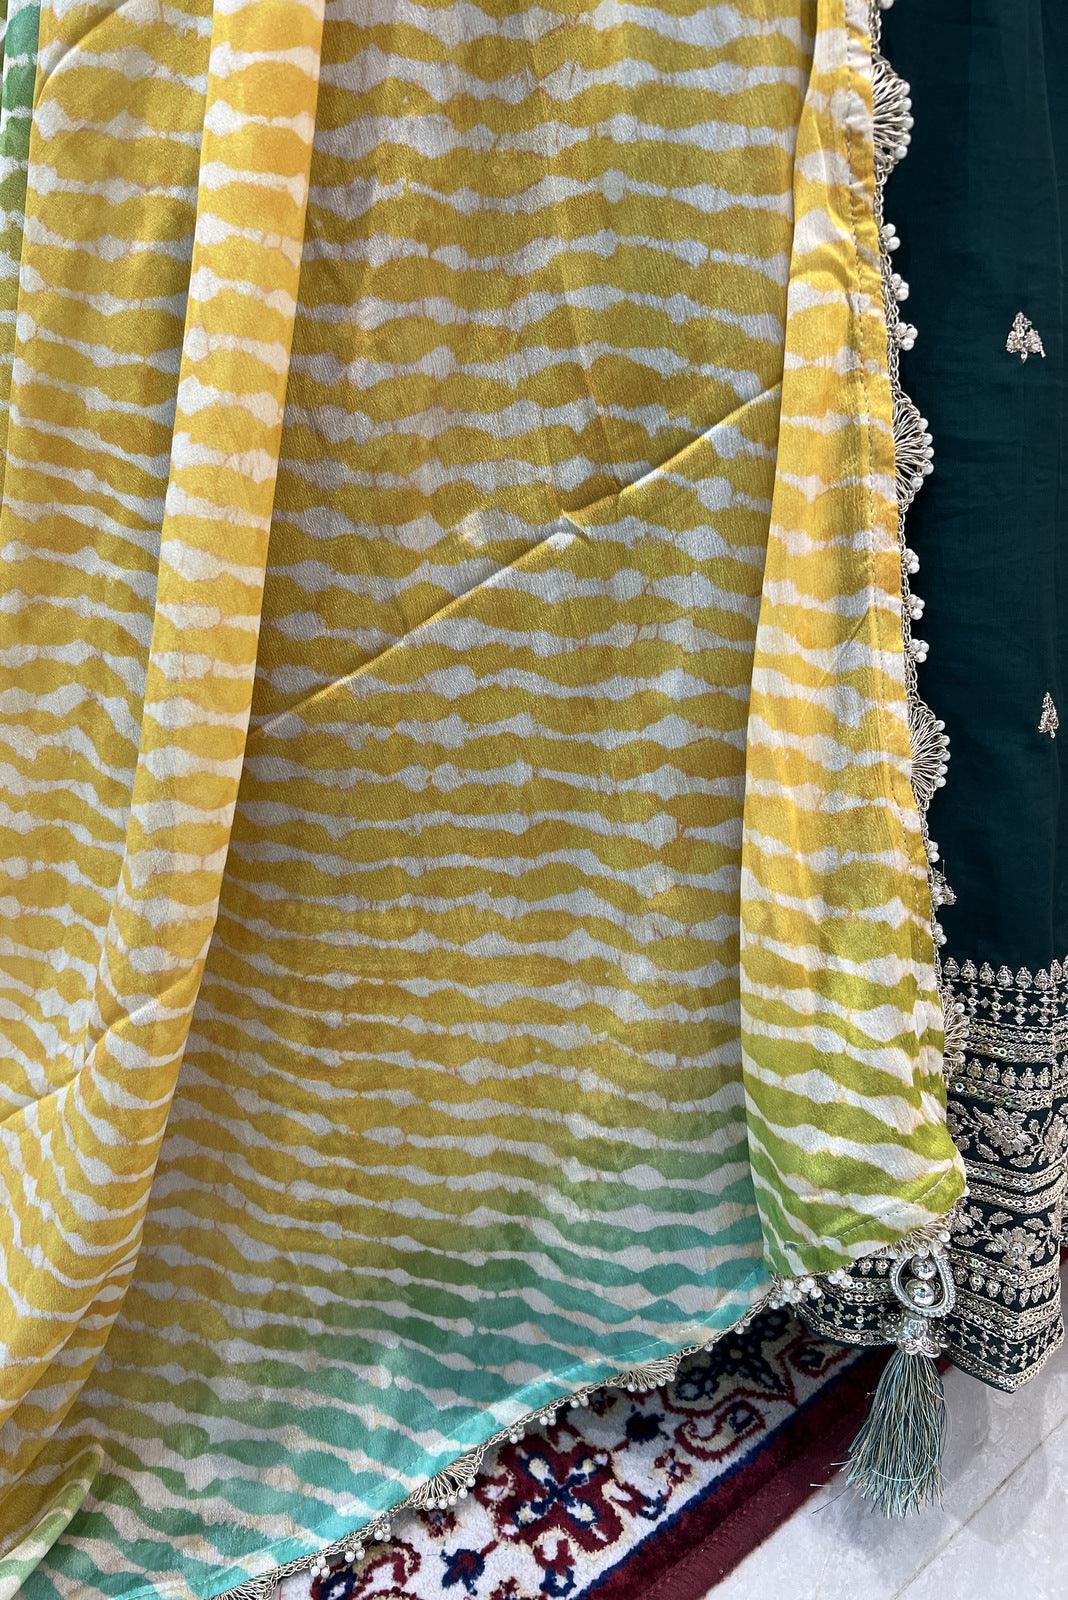 Bottle Green Pearl, Beads, Sequins, Zari and Zardozi work Crop Top Lehenga - Seasons Chennai